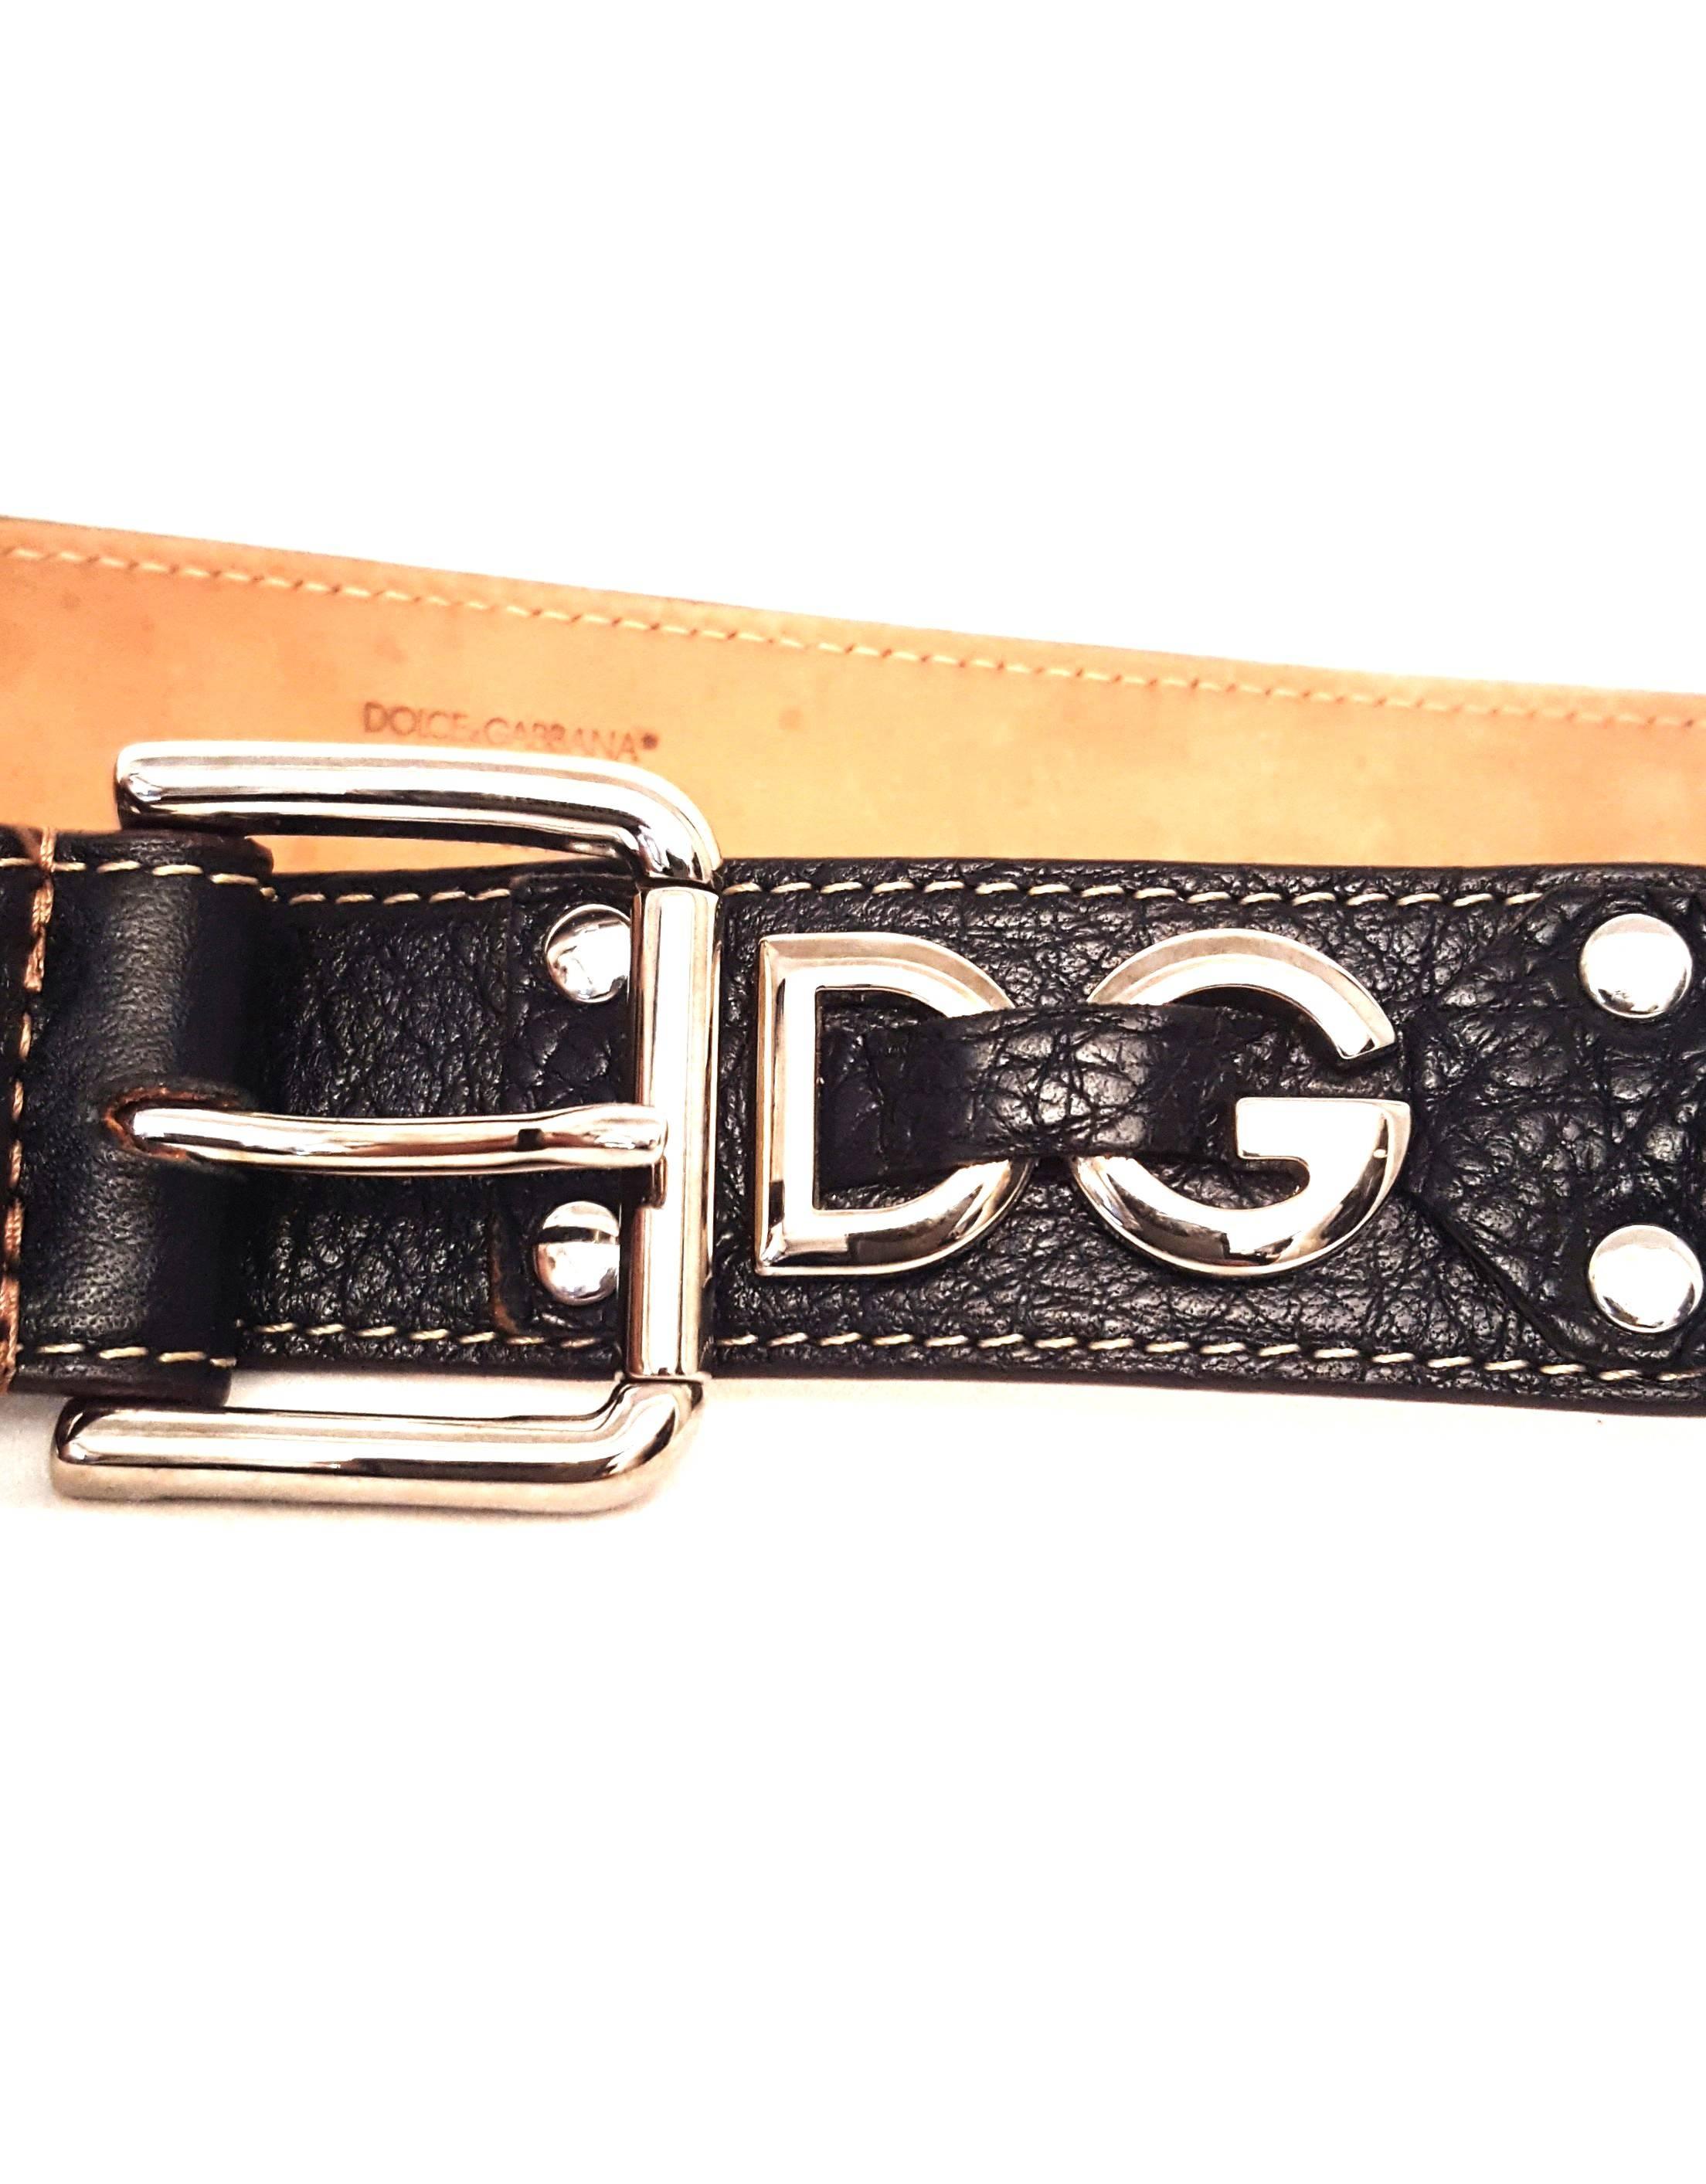 Women's or Men's Dolce & Gabbana Black Pebbled Leather Belt  Logo on Belt and Silver Tone Buckle  For Sale